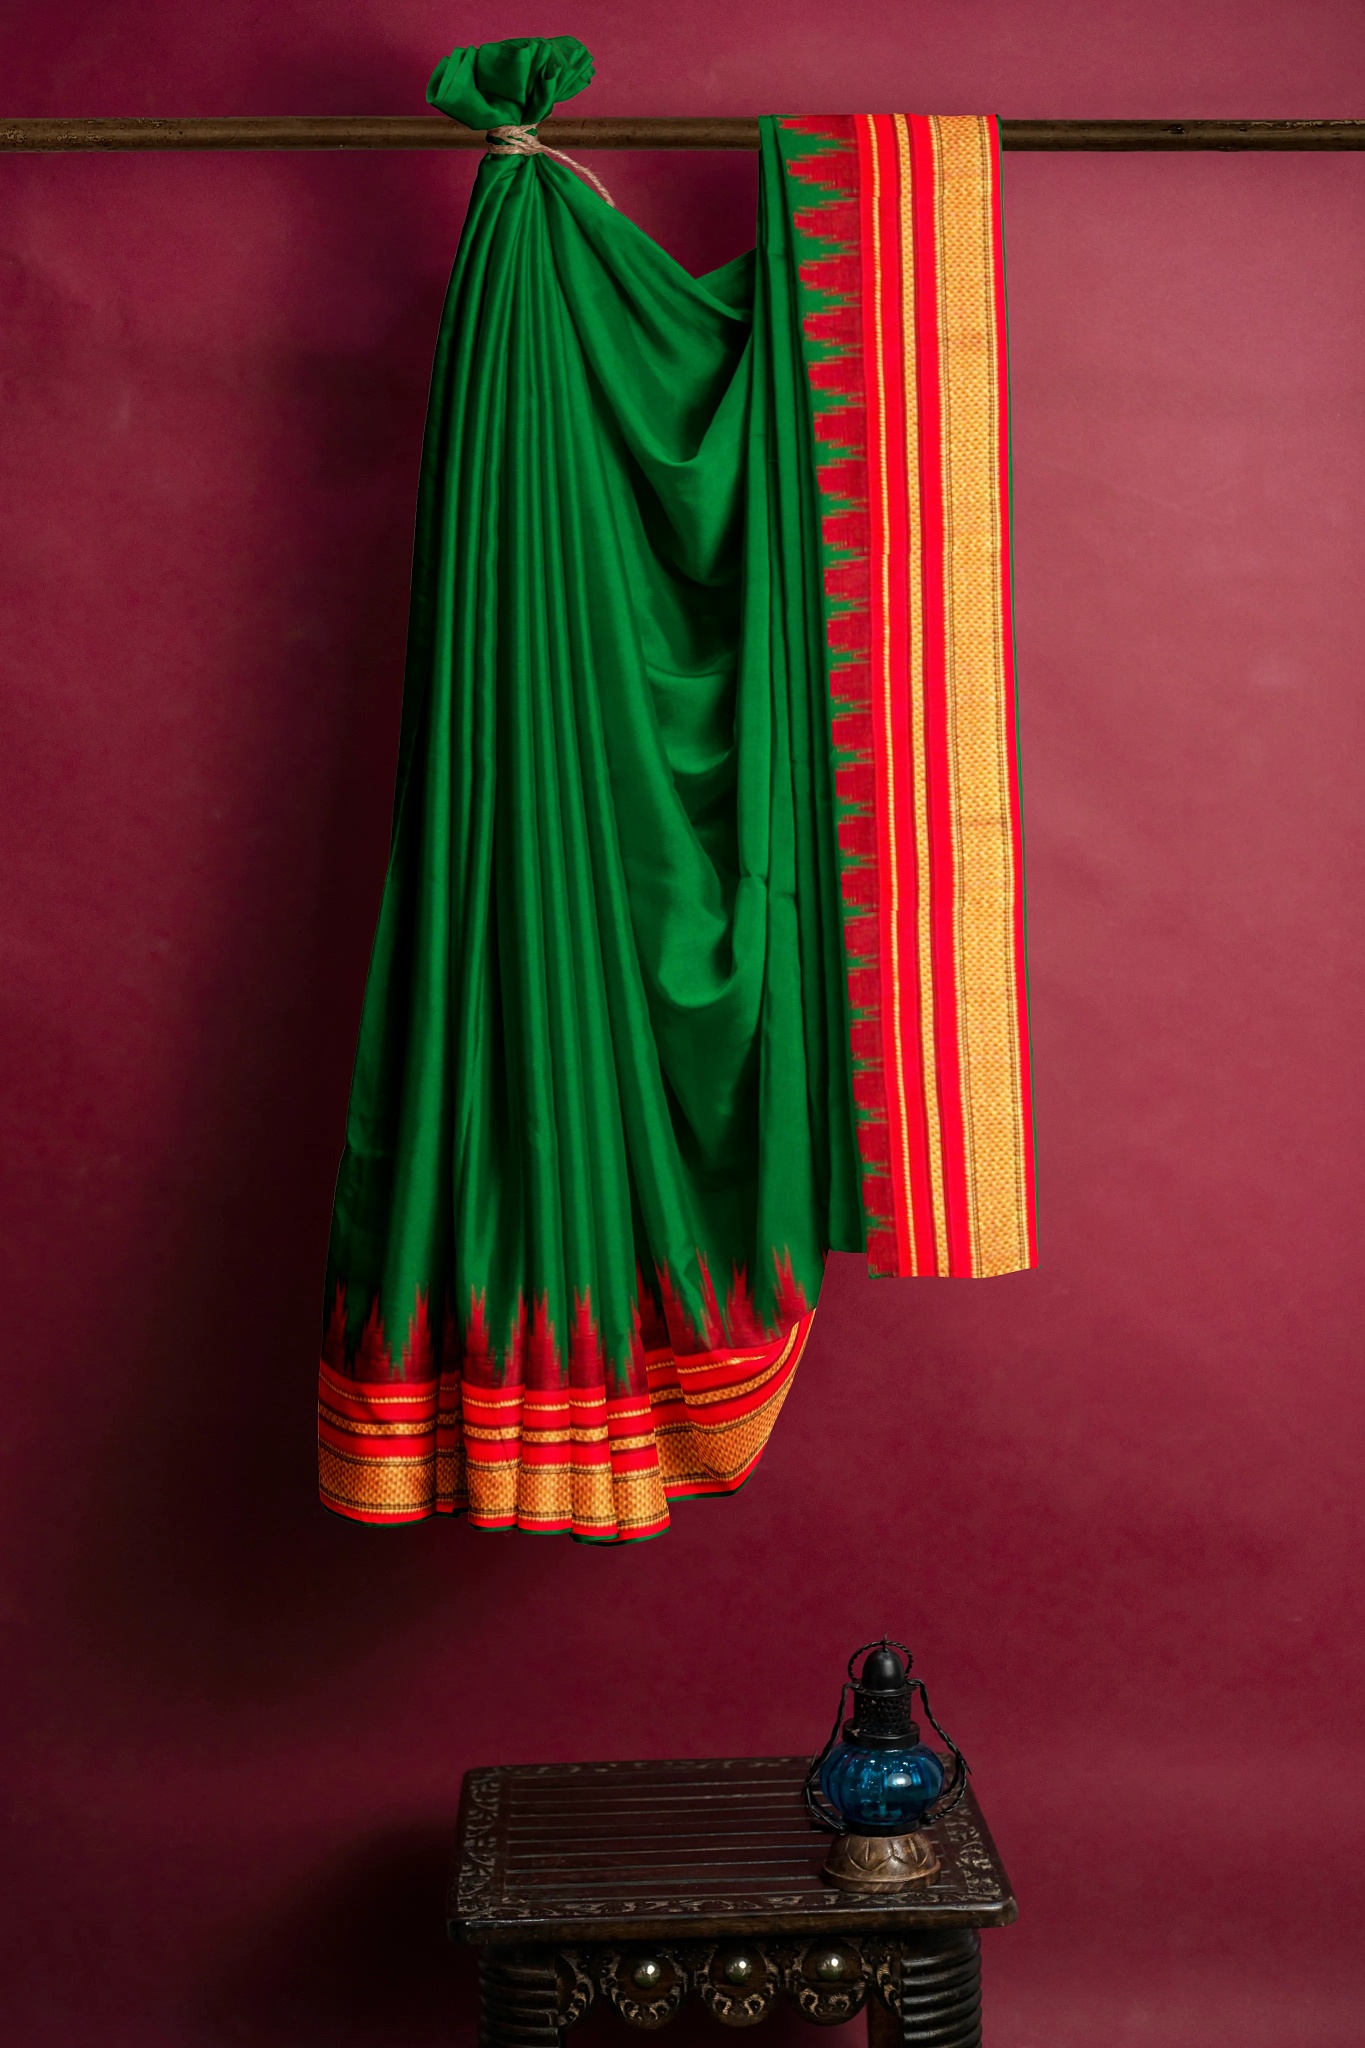 350 small business ideas | saree designs, stylish sarees, small business  ideas